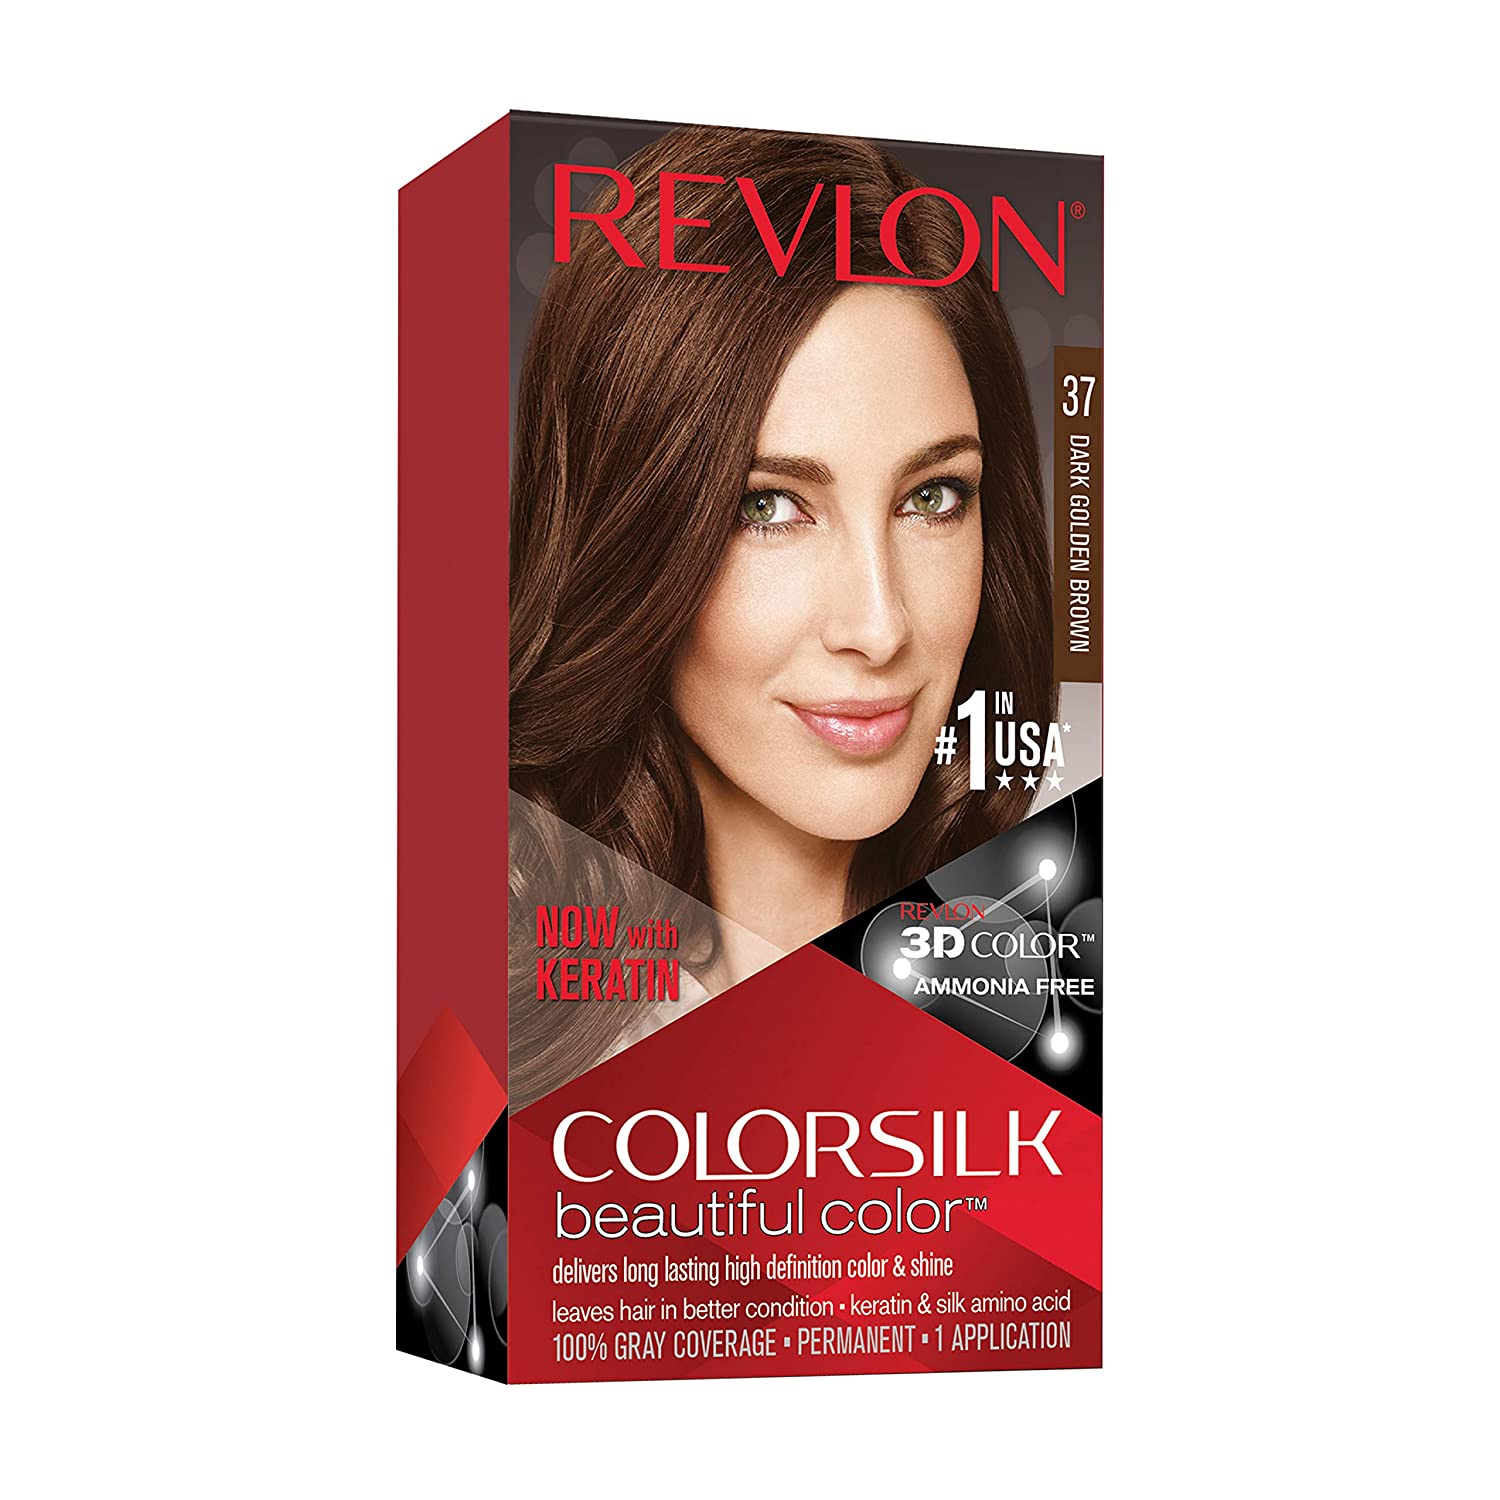 Revlon ColorSilk Beautiful Color Permanent Color #37 Dark Golden Brown, Pack of 2